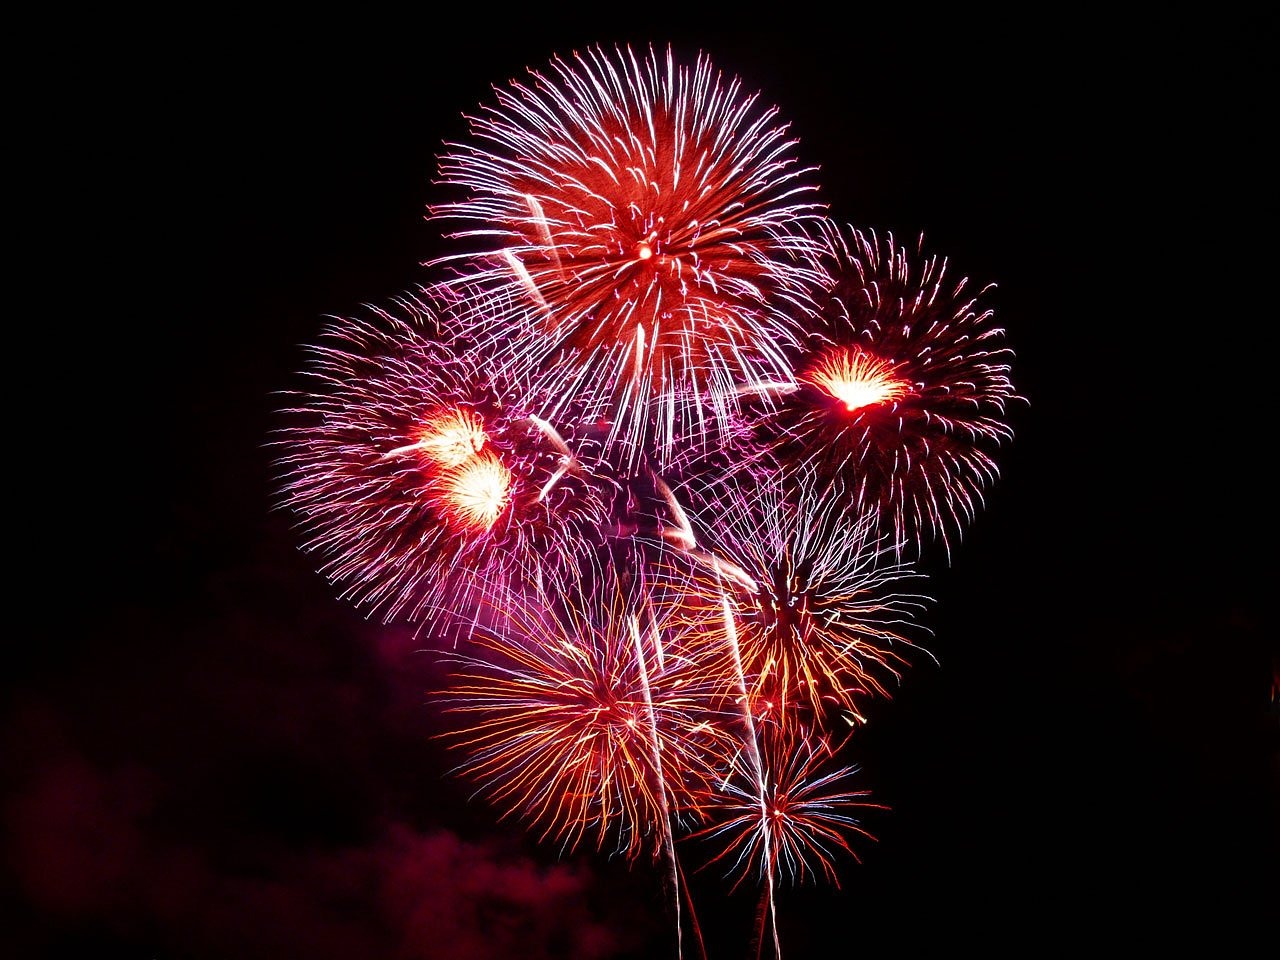 Image - fireworks rockets colors explosion